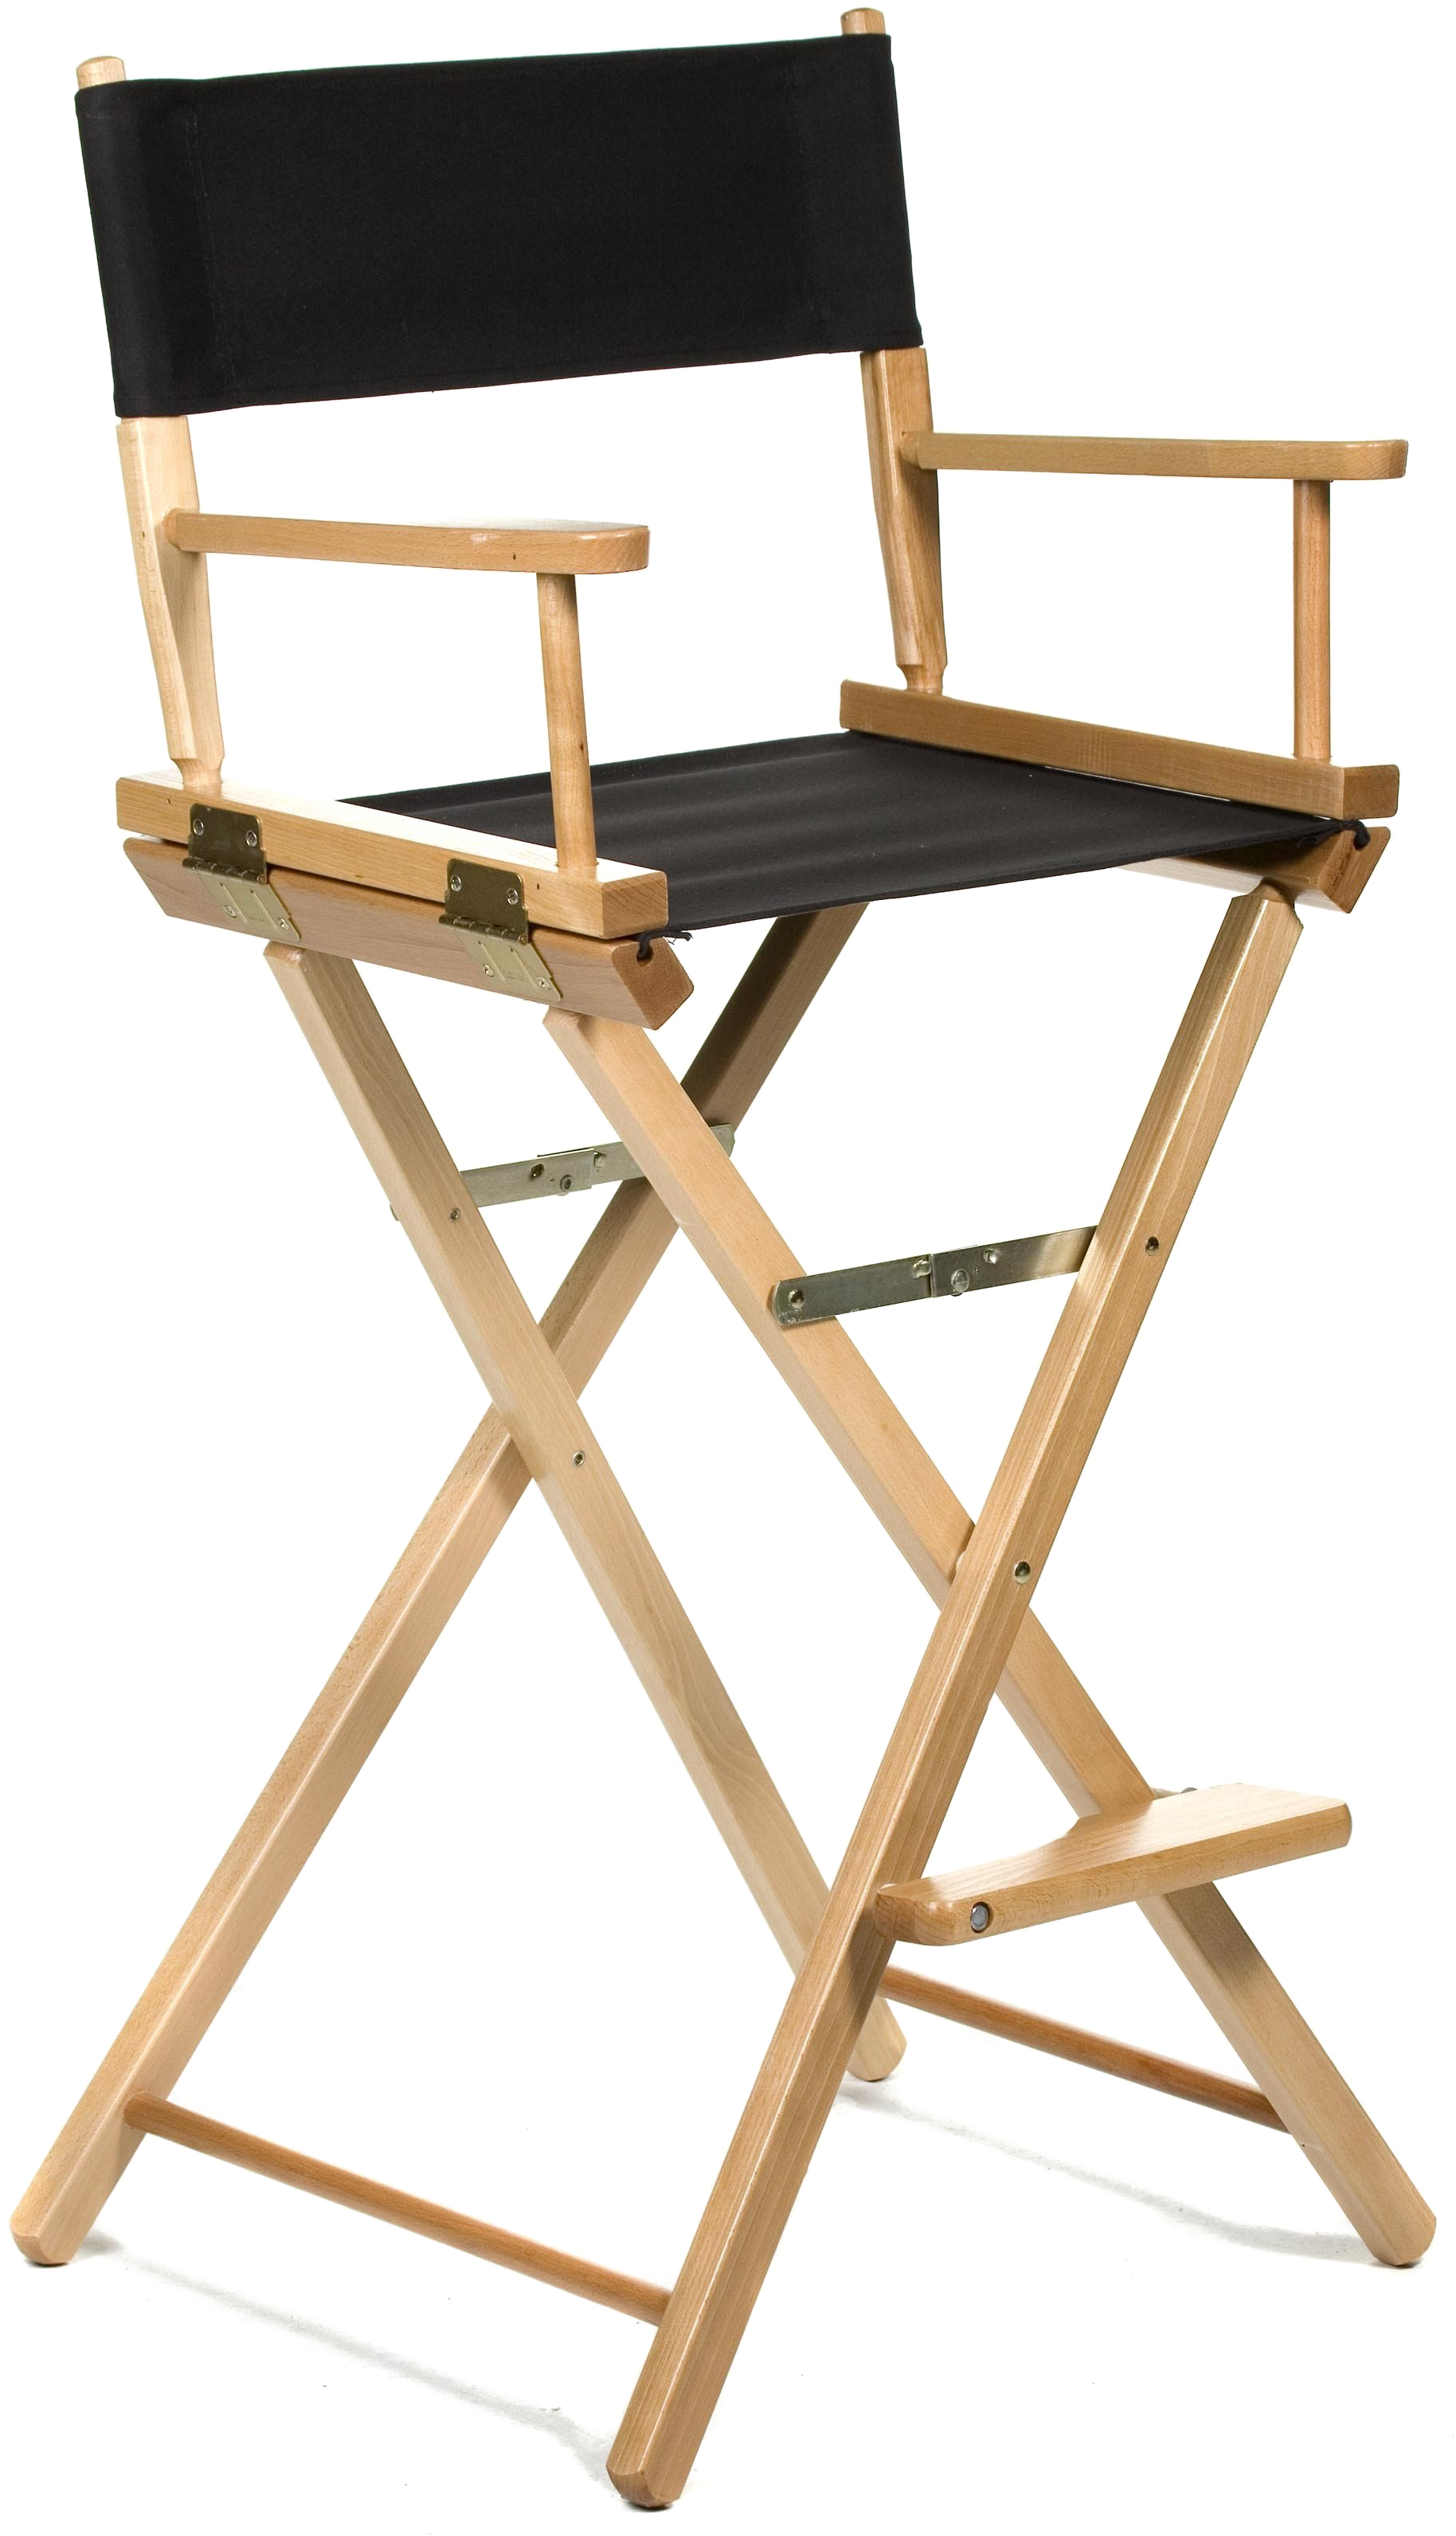 Director's Chair Equipment